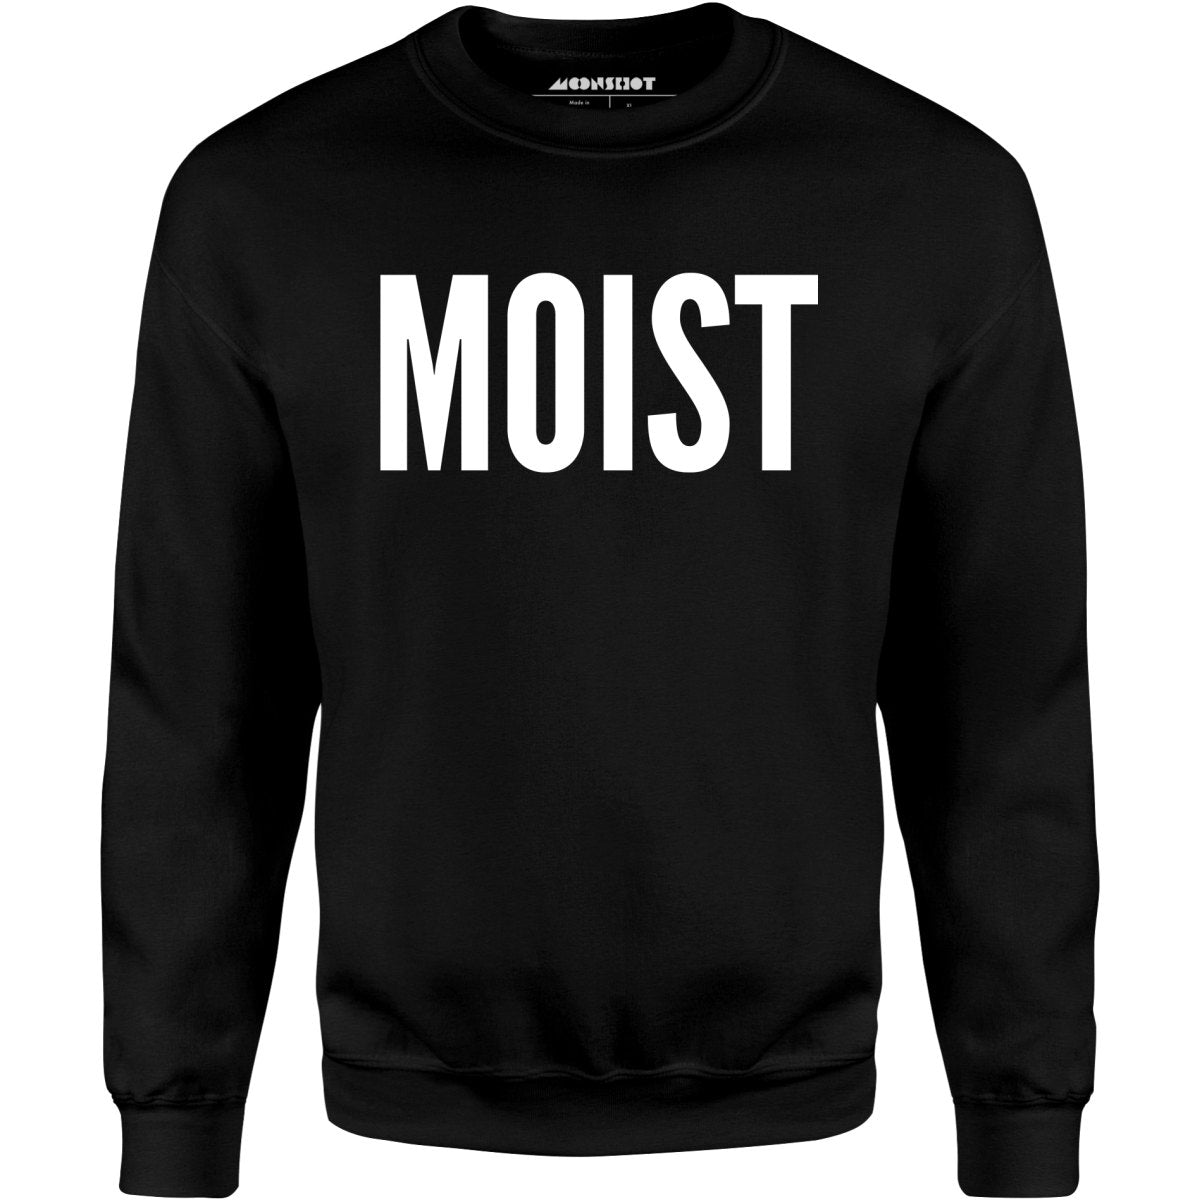 Moist - Unisex Sweatshirt